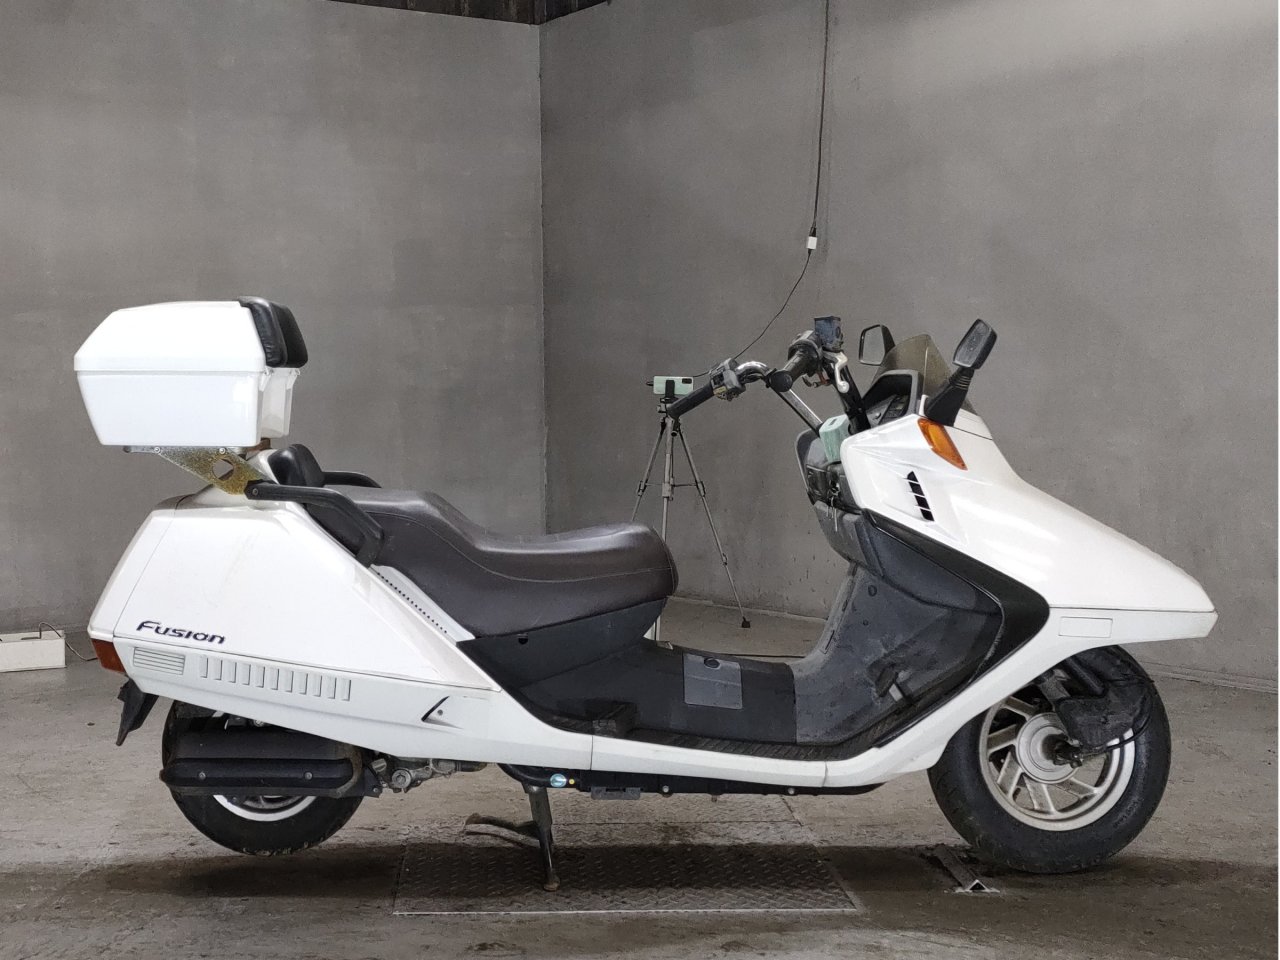 Honda Fusion X - Adamoto - Motorcycles from Japan